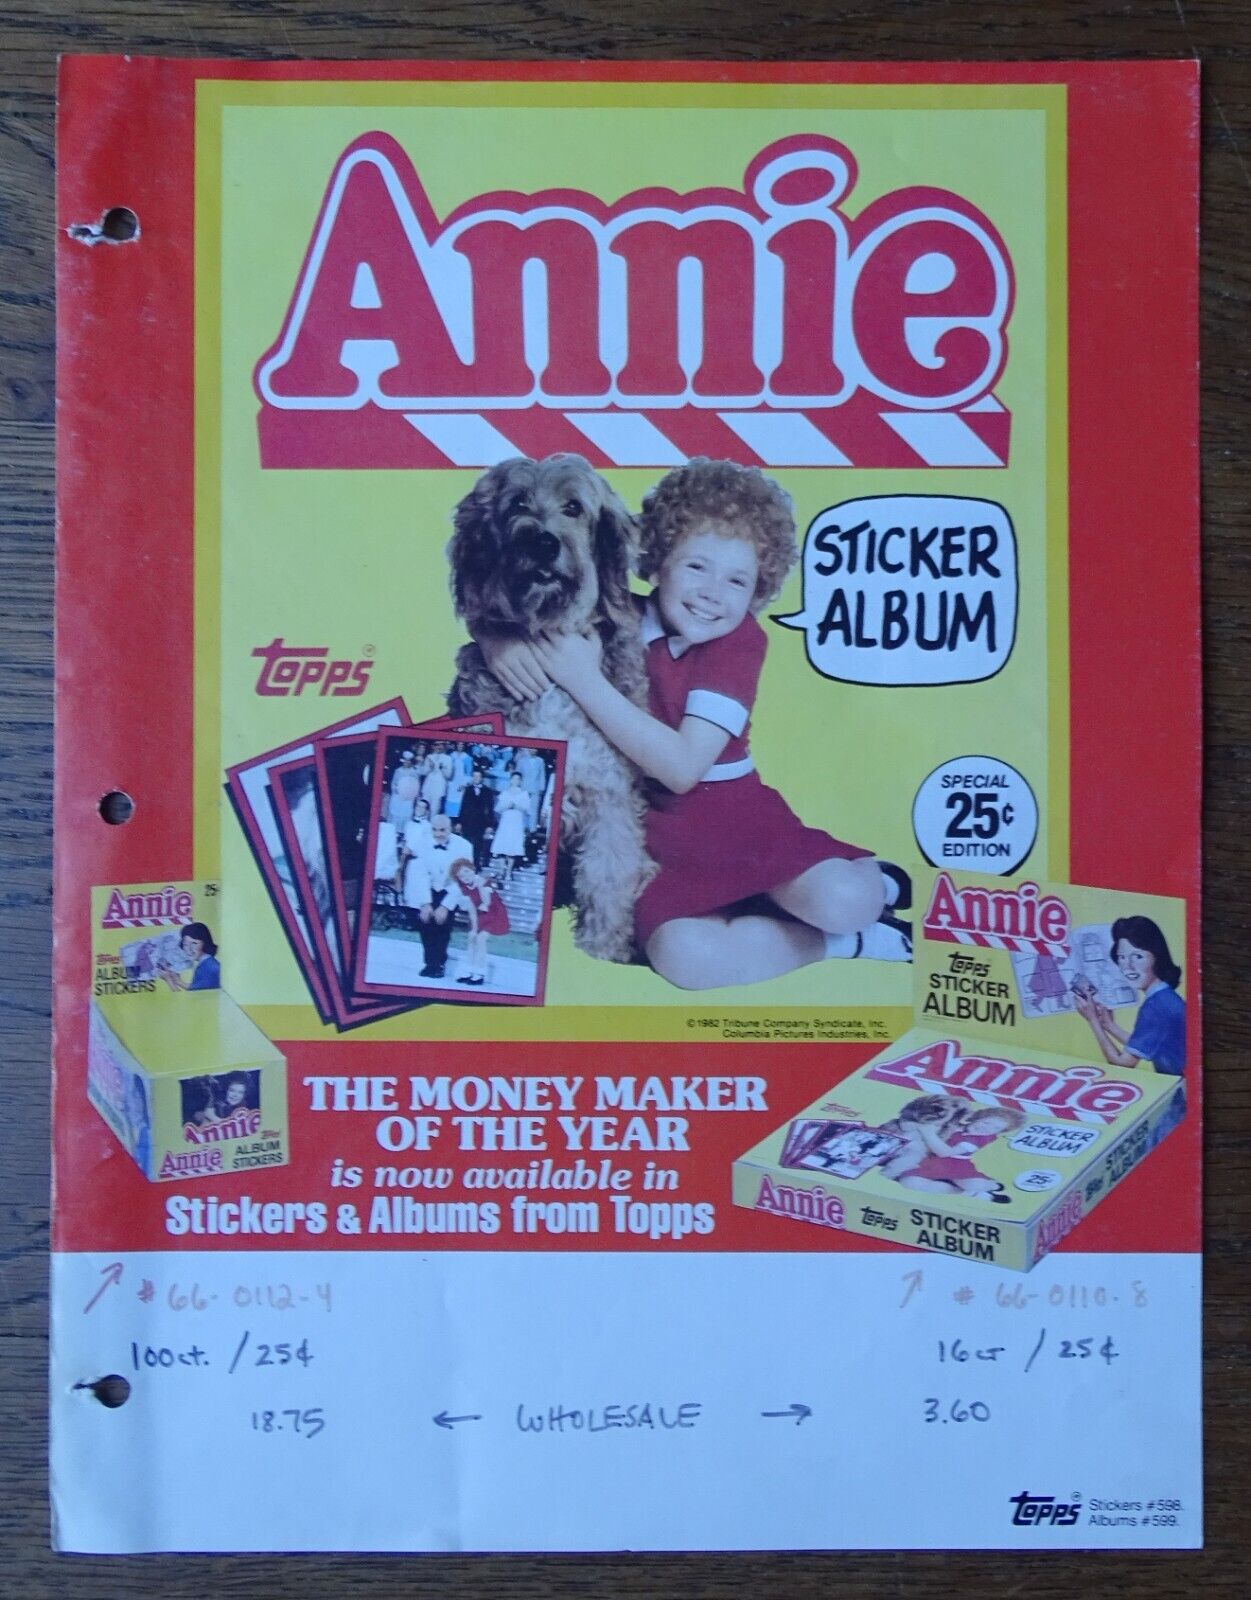 1982 Topps Annie Sticker Album Sell Sheet (NO PRODUCT) Aileen Marie Quinn 